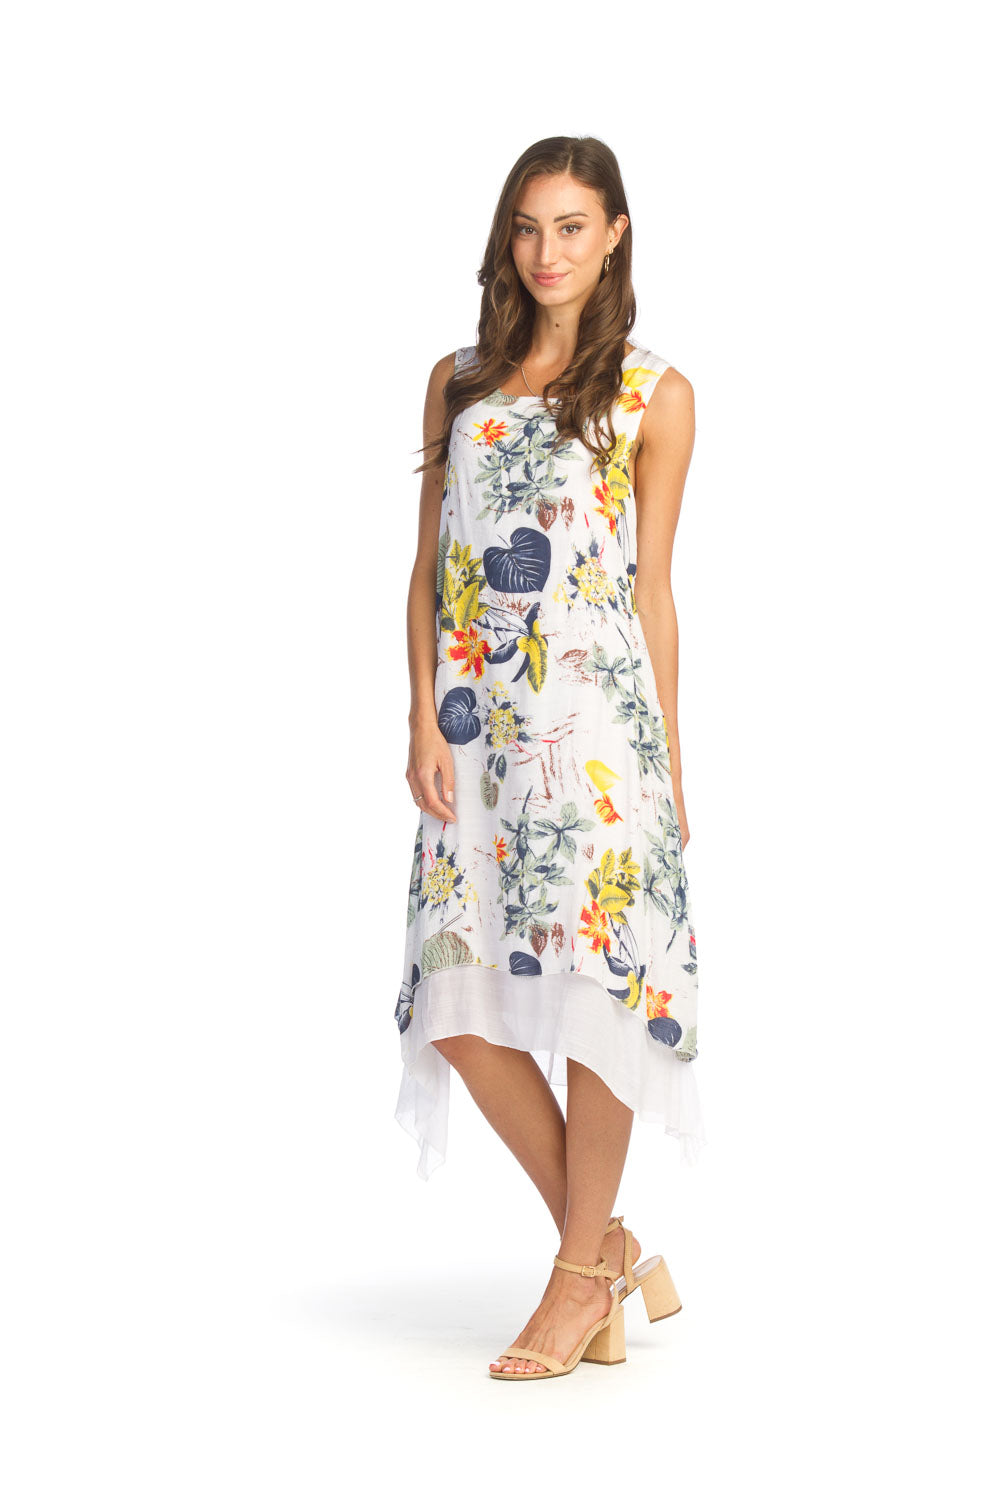 SALE Papillon PD14587 Multi Floral Layered Dress